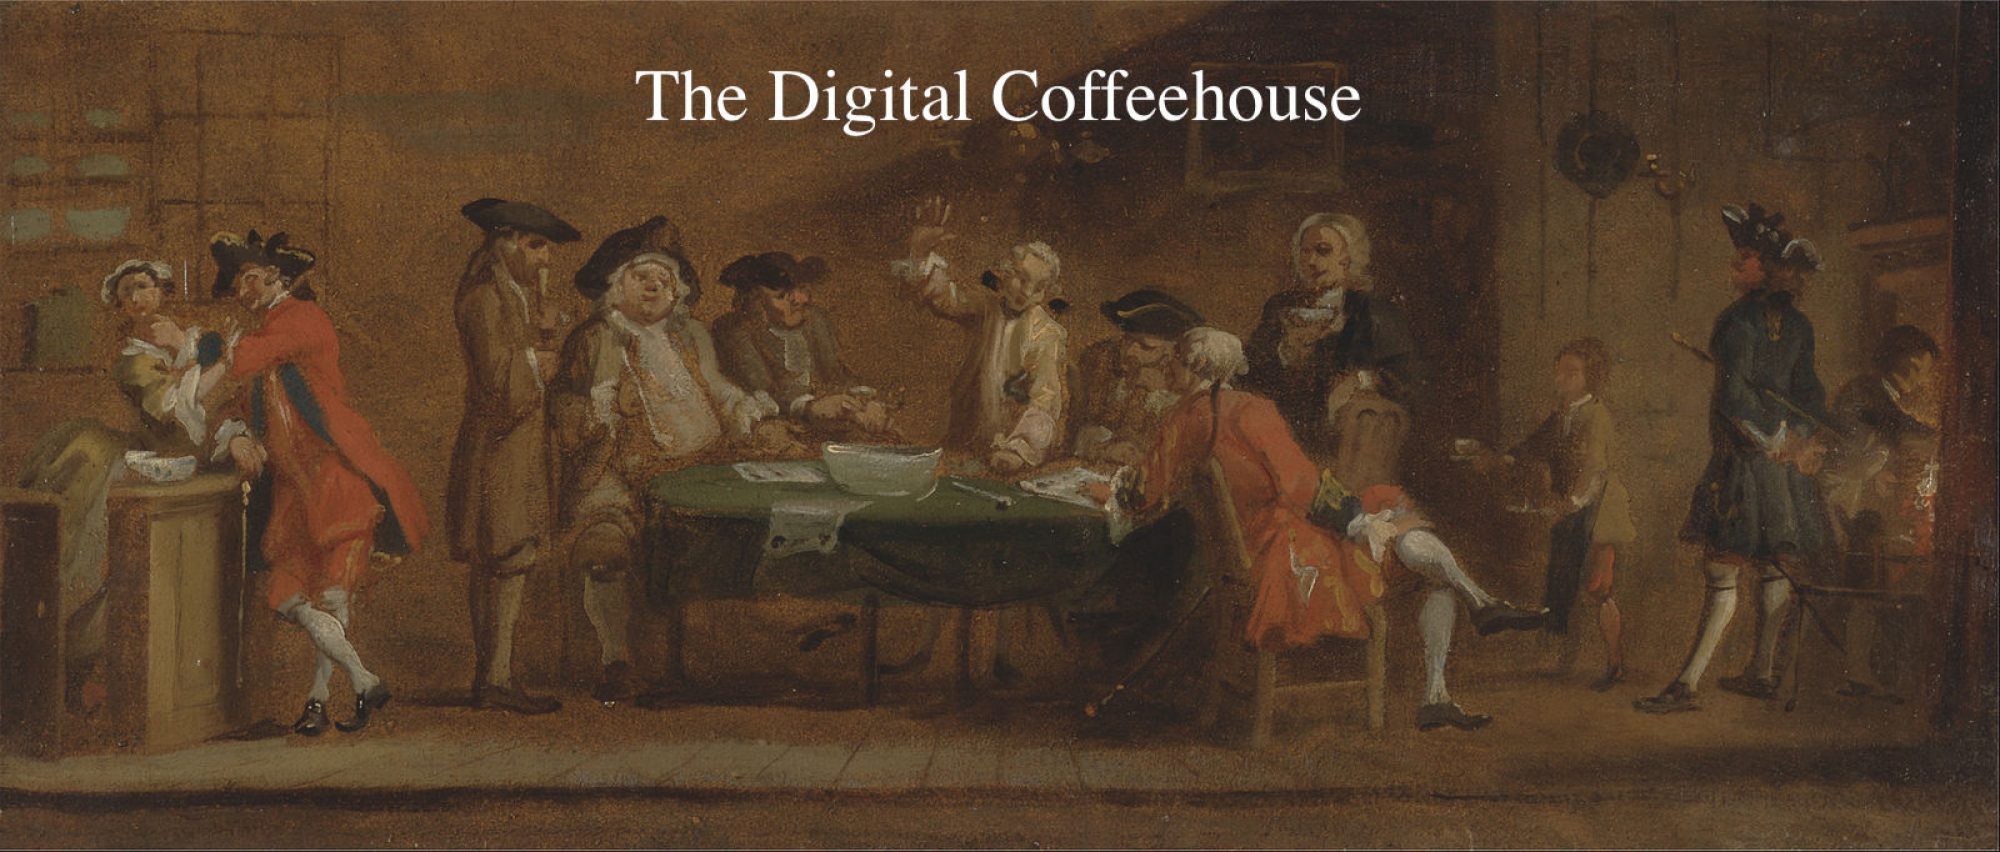 The Digital Coffeehouse